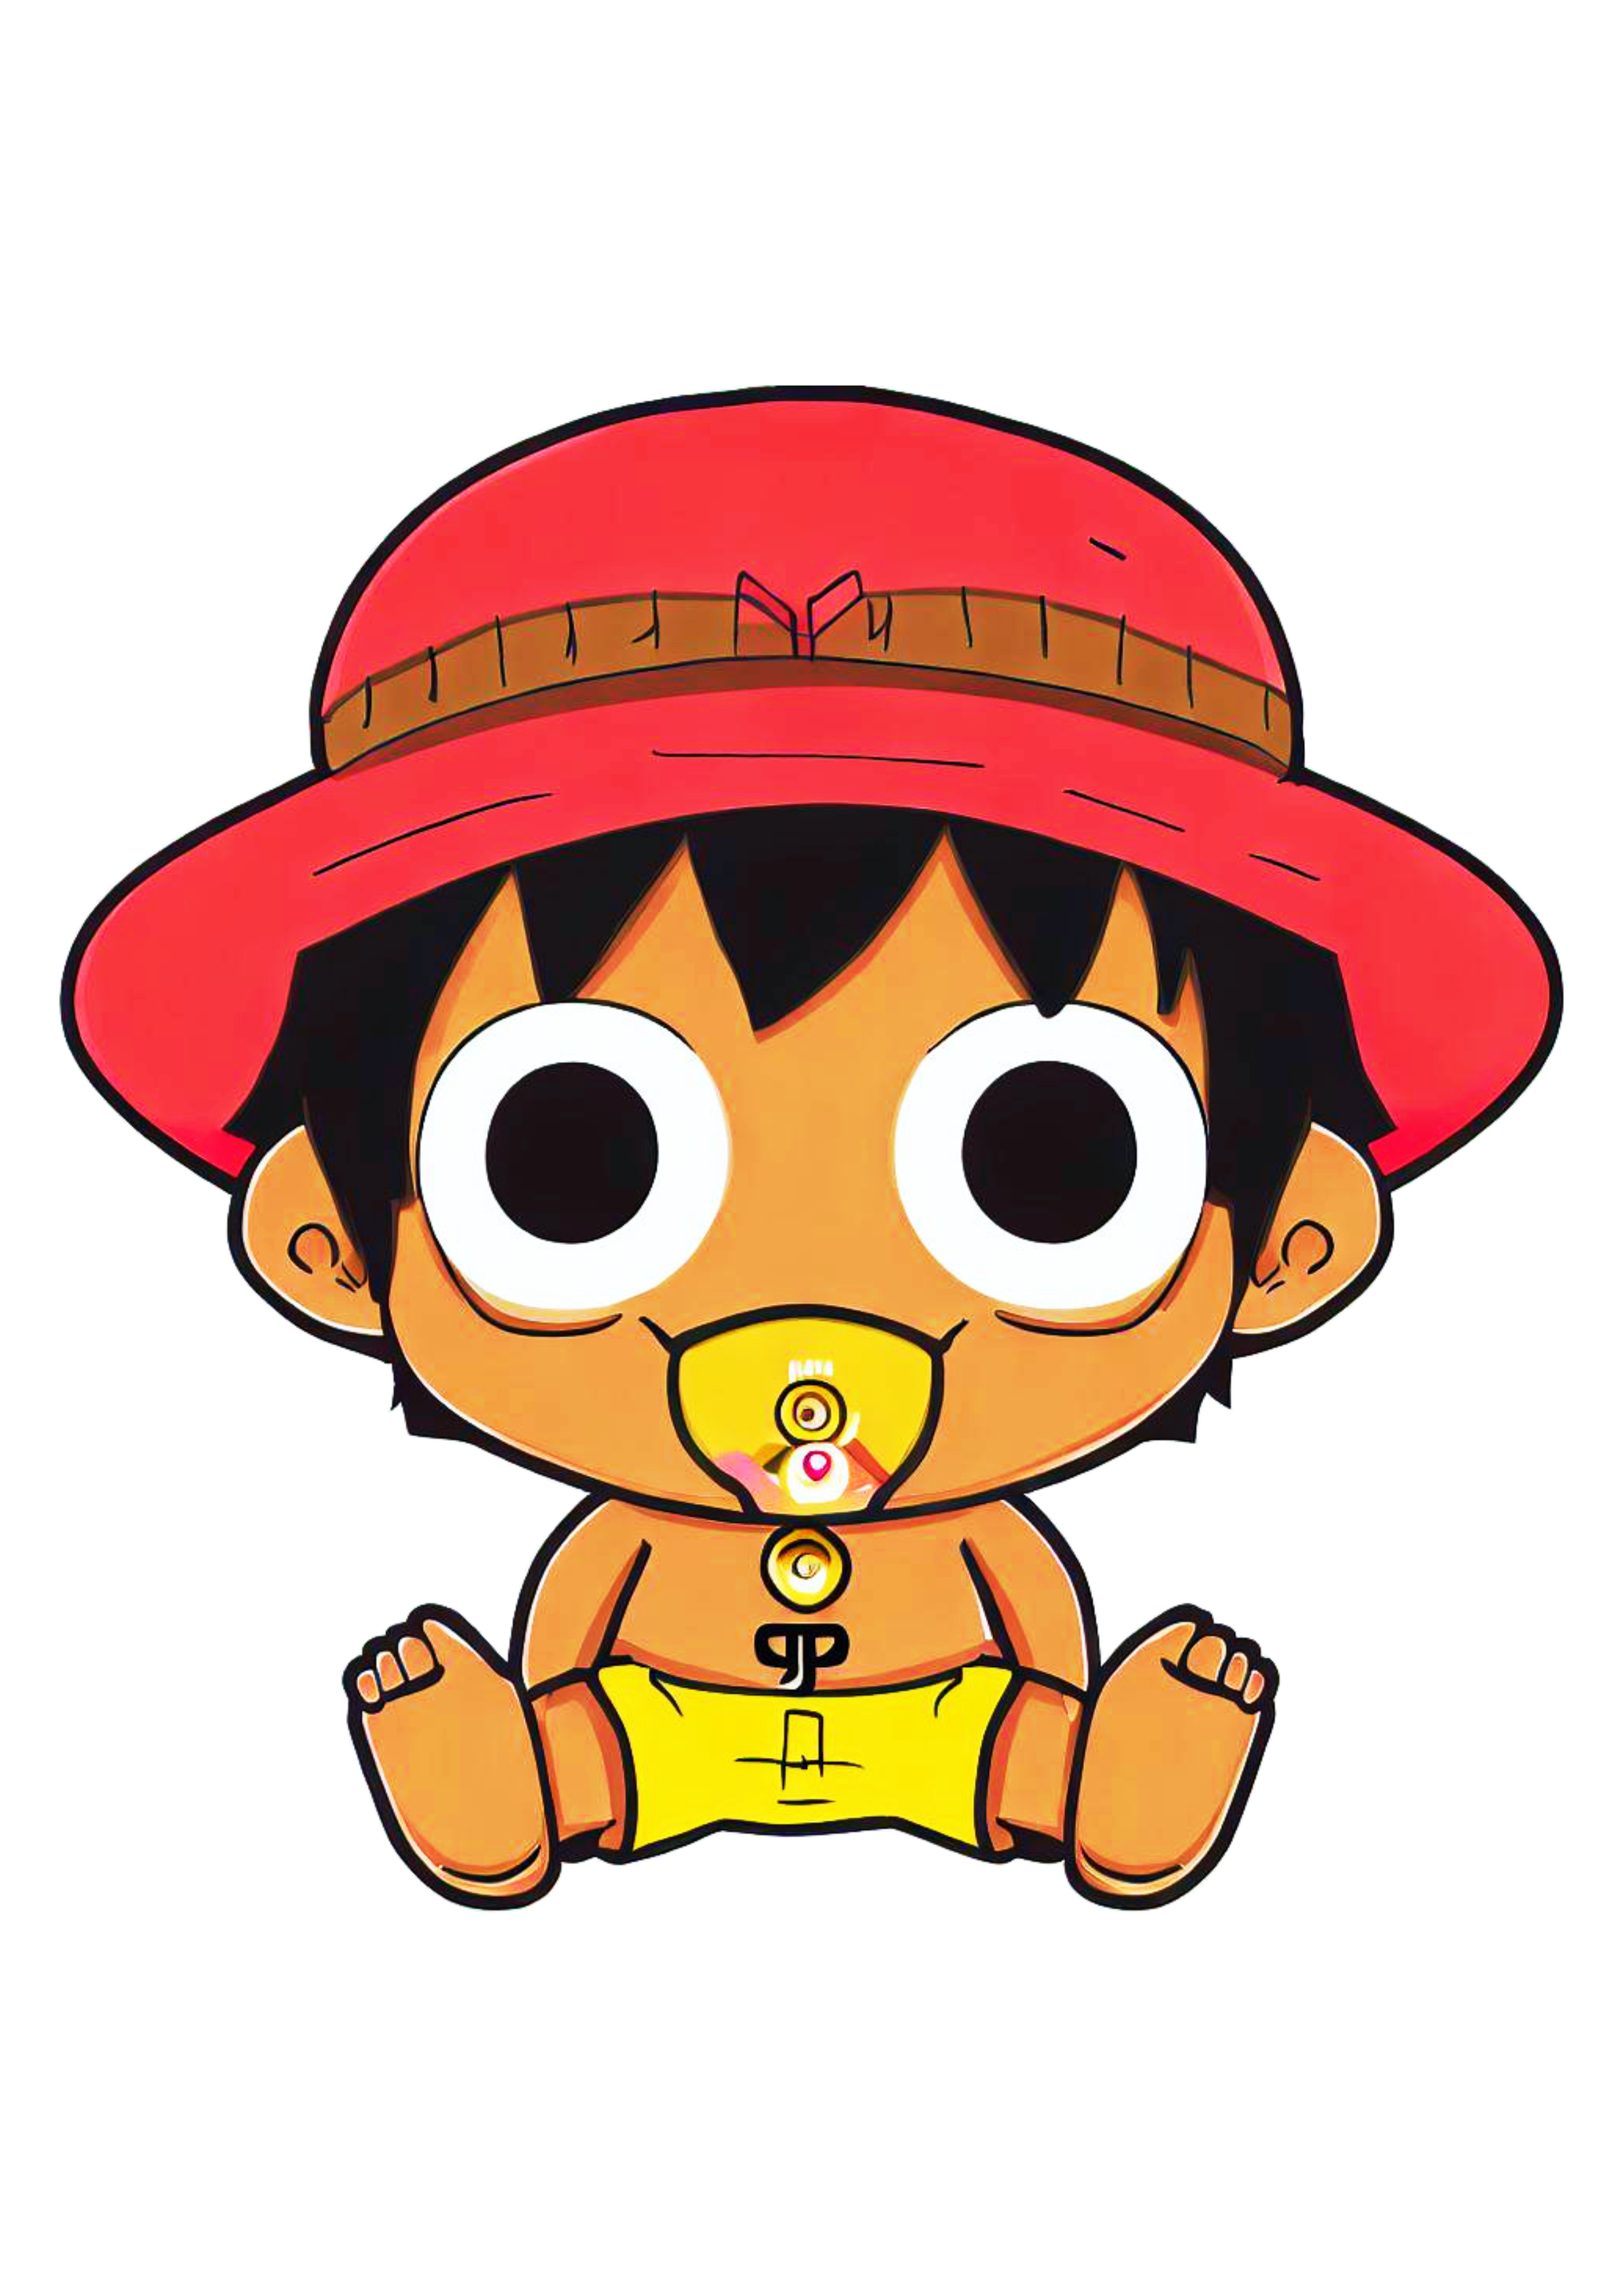 Monkey D. Luffy Portgas D. Ace Anime Chibi One Piece, ás, chapéu, chibi,  chapéu de cowboy png